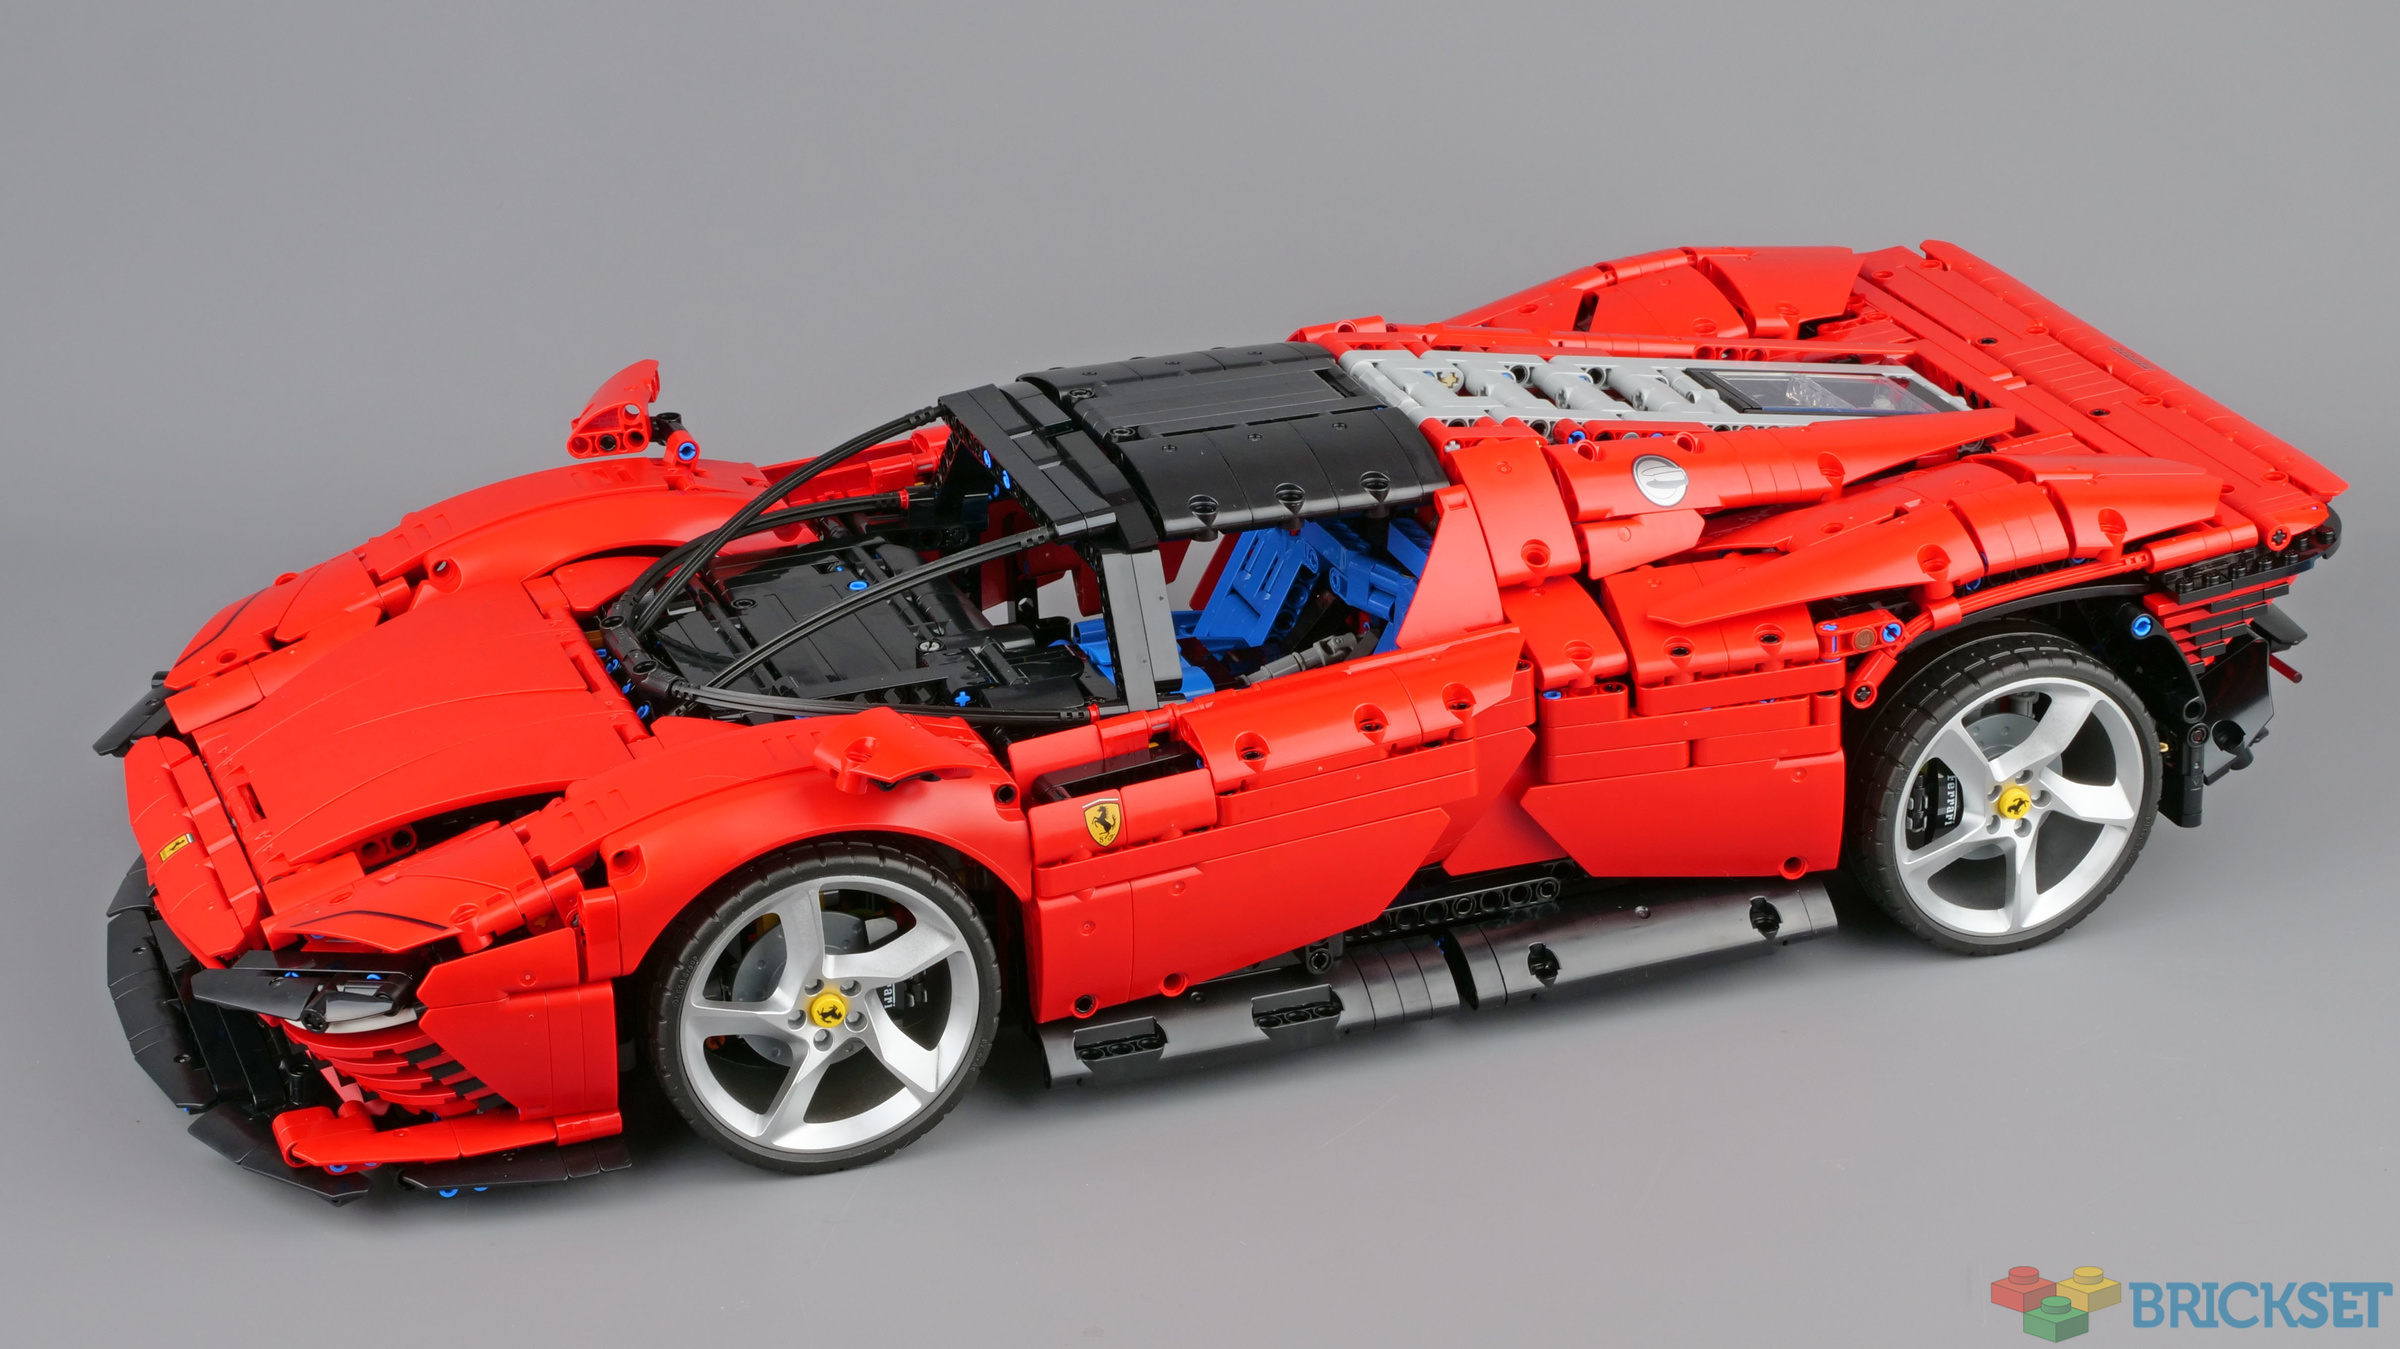 LEGO Technic Ferrari Daytona SP3 unveiled